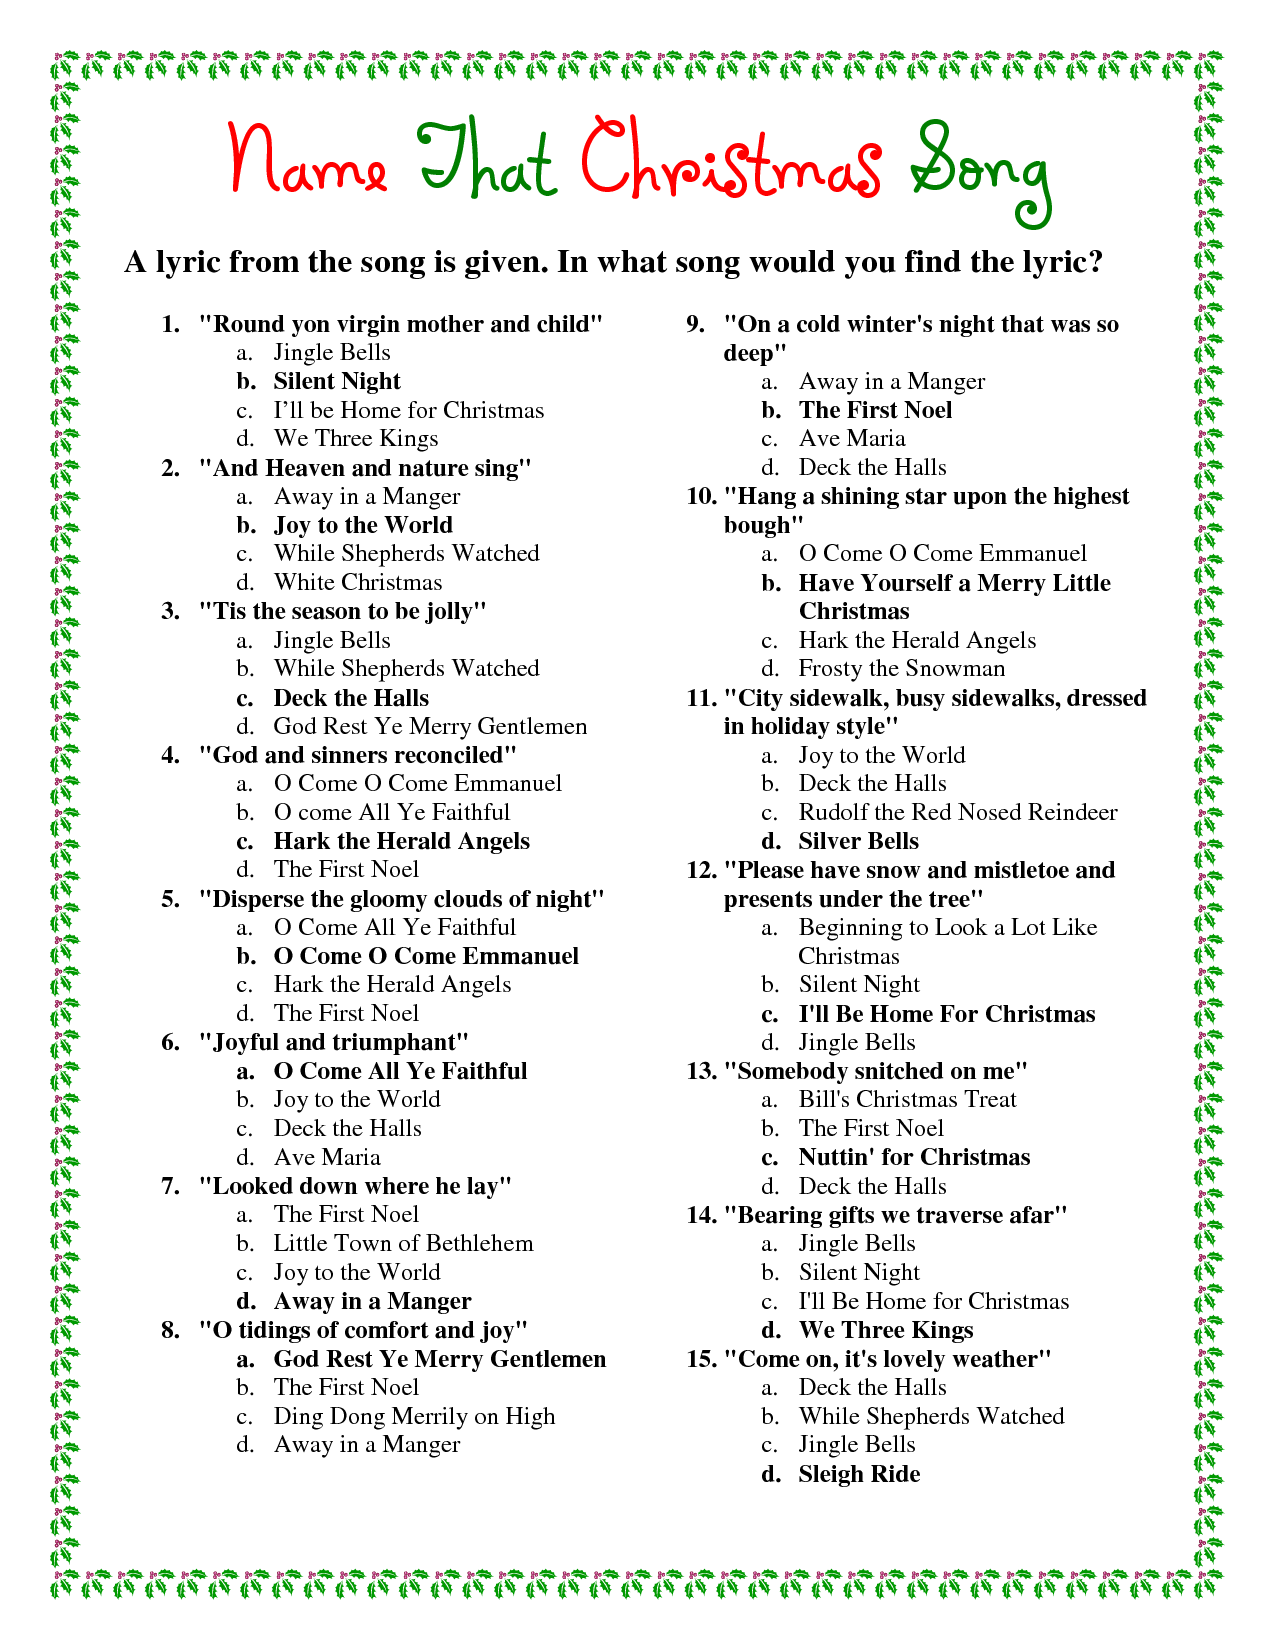 Christmas Songs Worksheet Answers AlphabetWorksheetsFree com